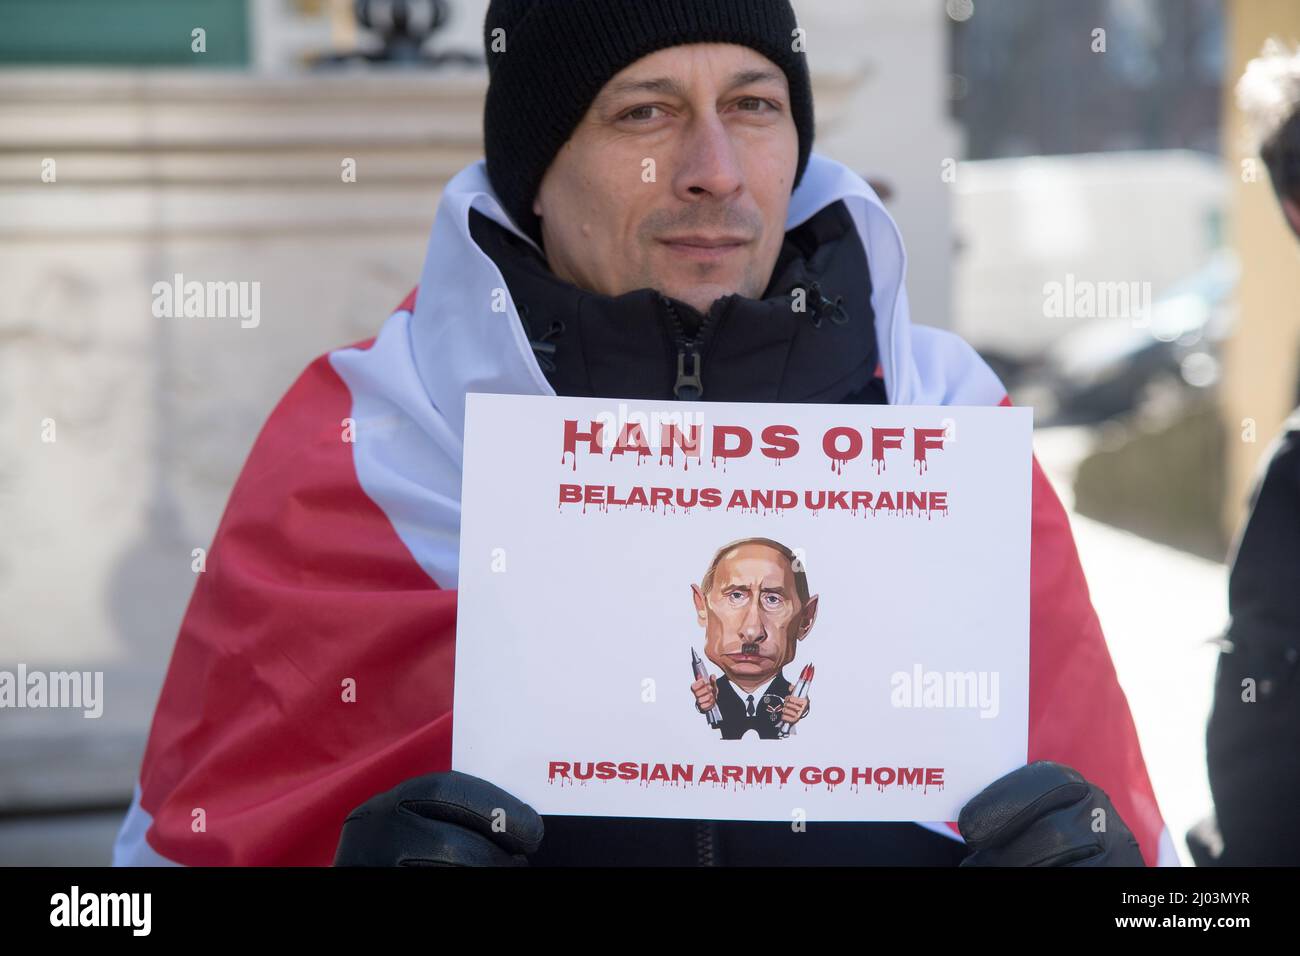 Anti-war protest of Ukrainians against Russian invasion on Ukraine. Gdansk, Poland, March 13th 2022 © Wojciech Strozyk / Alamy Stock Photo Stock Photo